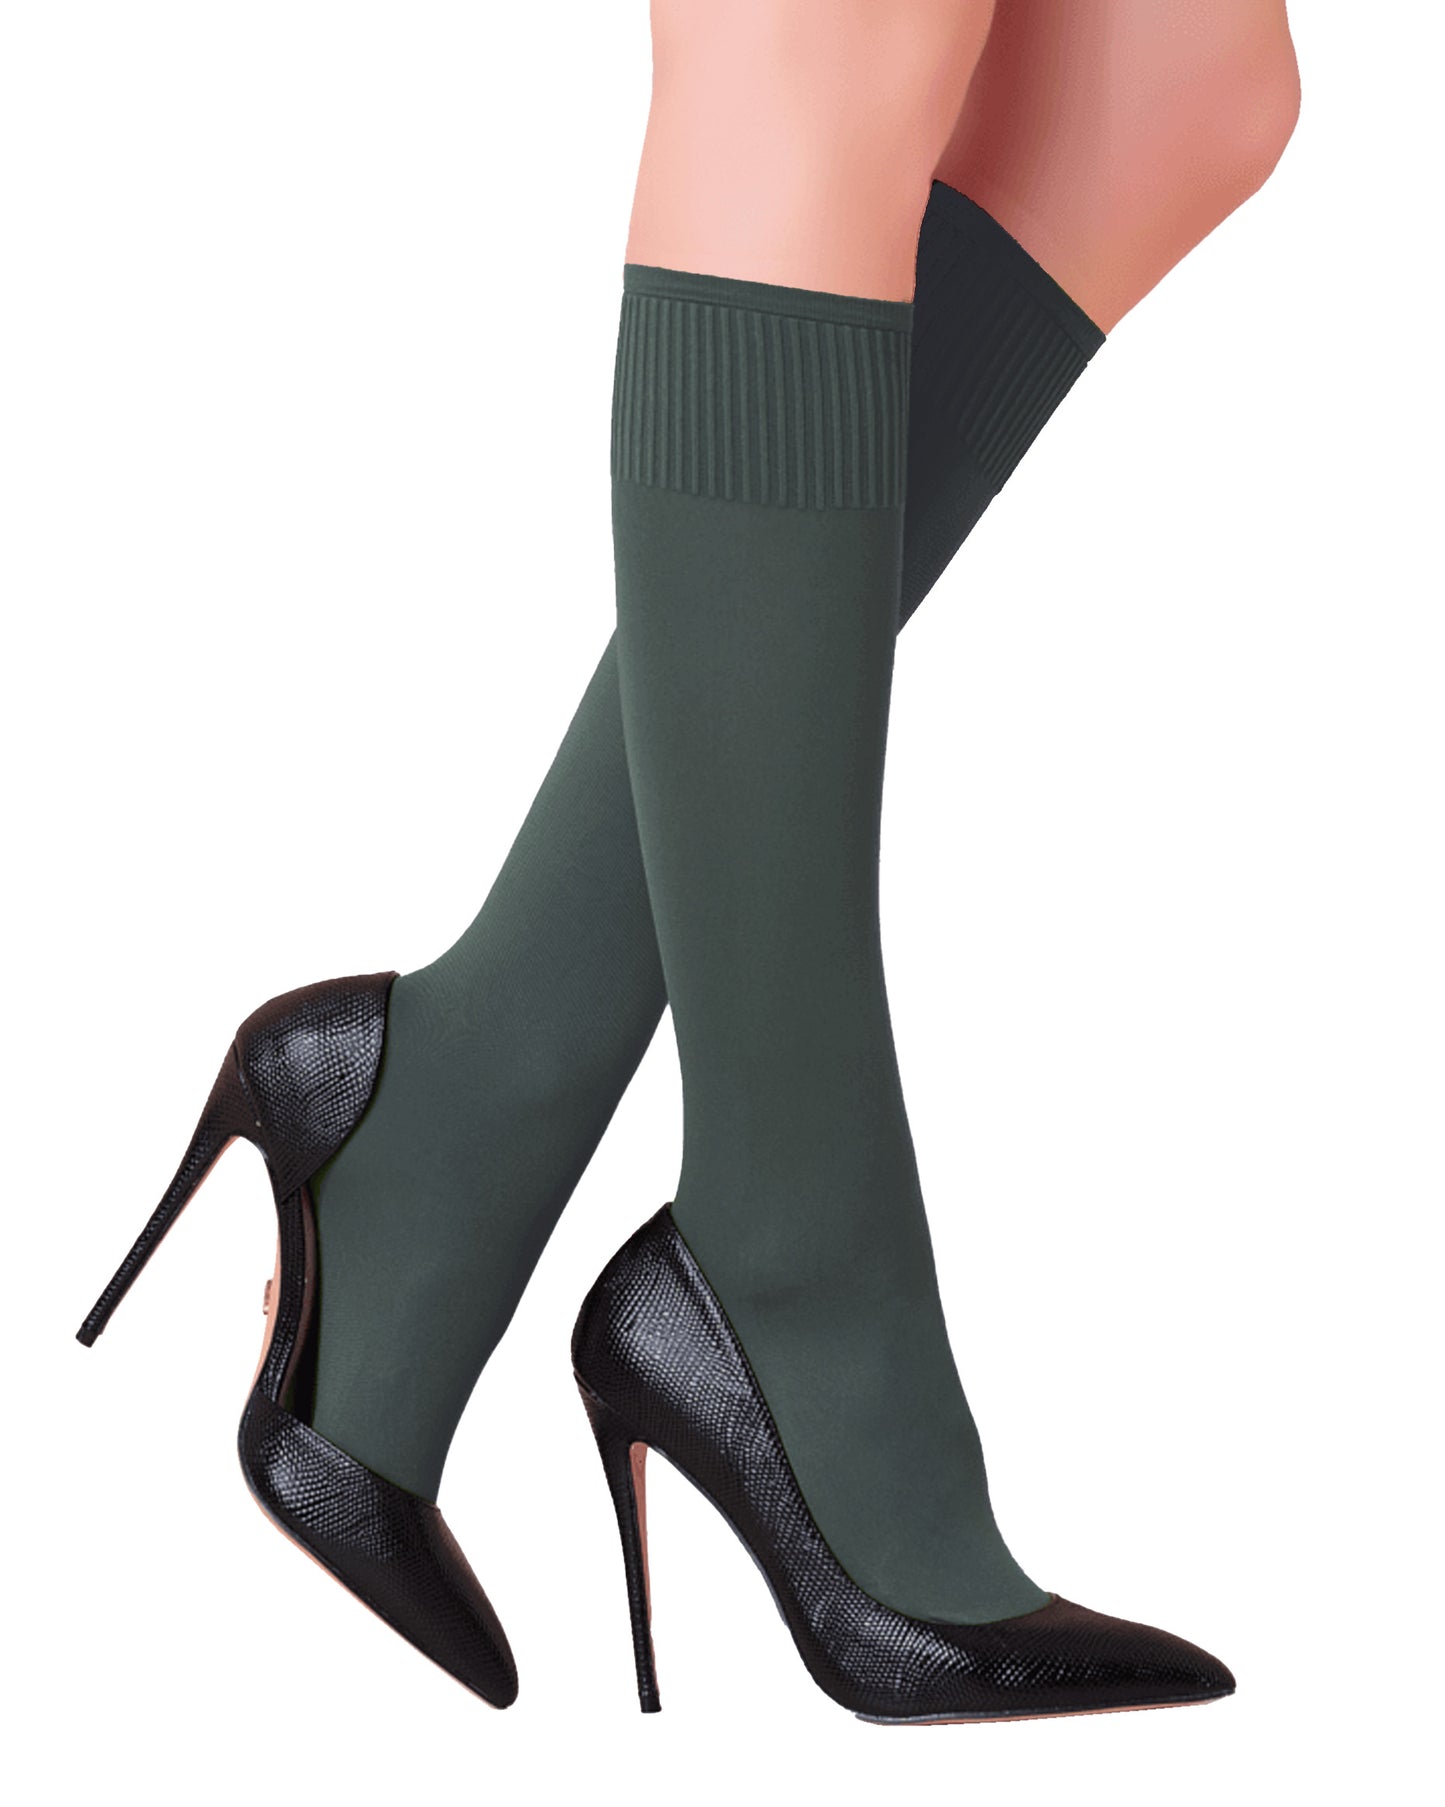 Trasparenze Cinzia Gambaletto - Faded teal green (pino) matte opaque knee-high socks with deep comfort cuffs.